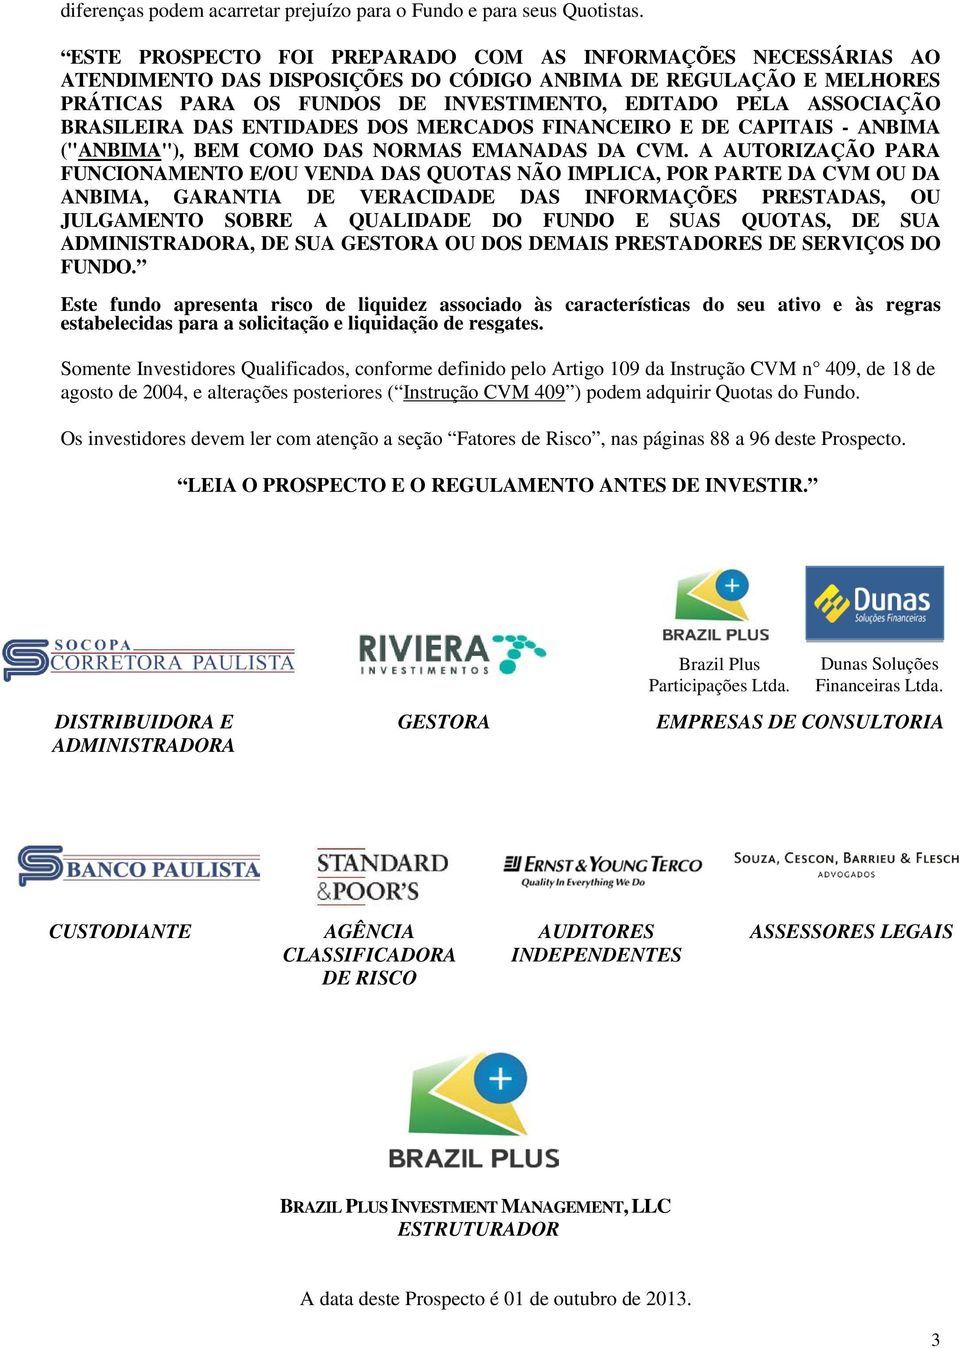 BRASILEIRA DAS ENTIDADES DOS MERCADOS FINANCEIRO E DE CAPITAIS - ANBIMA ("ANBIMA"), BEM COMO DAS NORMAS EMANADAS DA CVM.